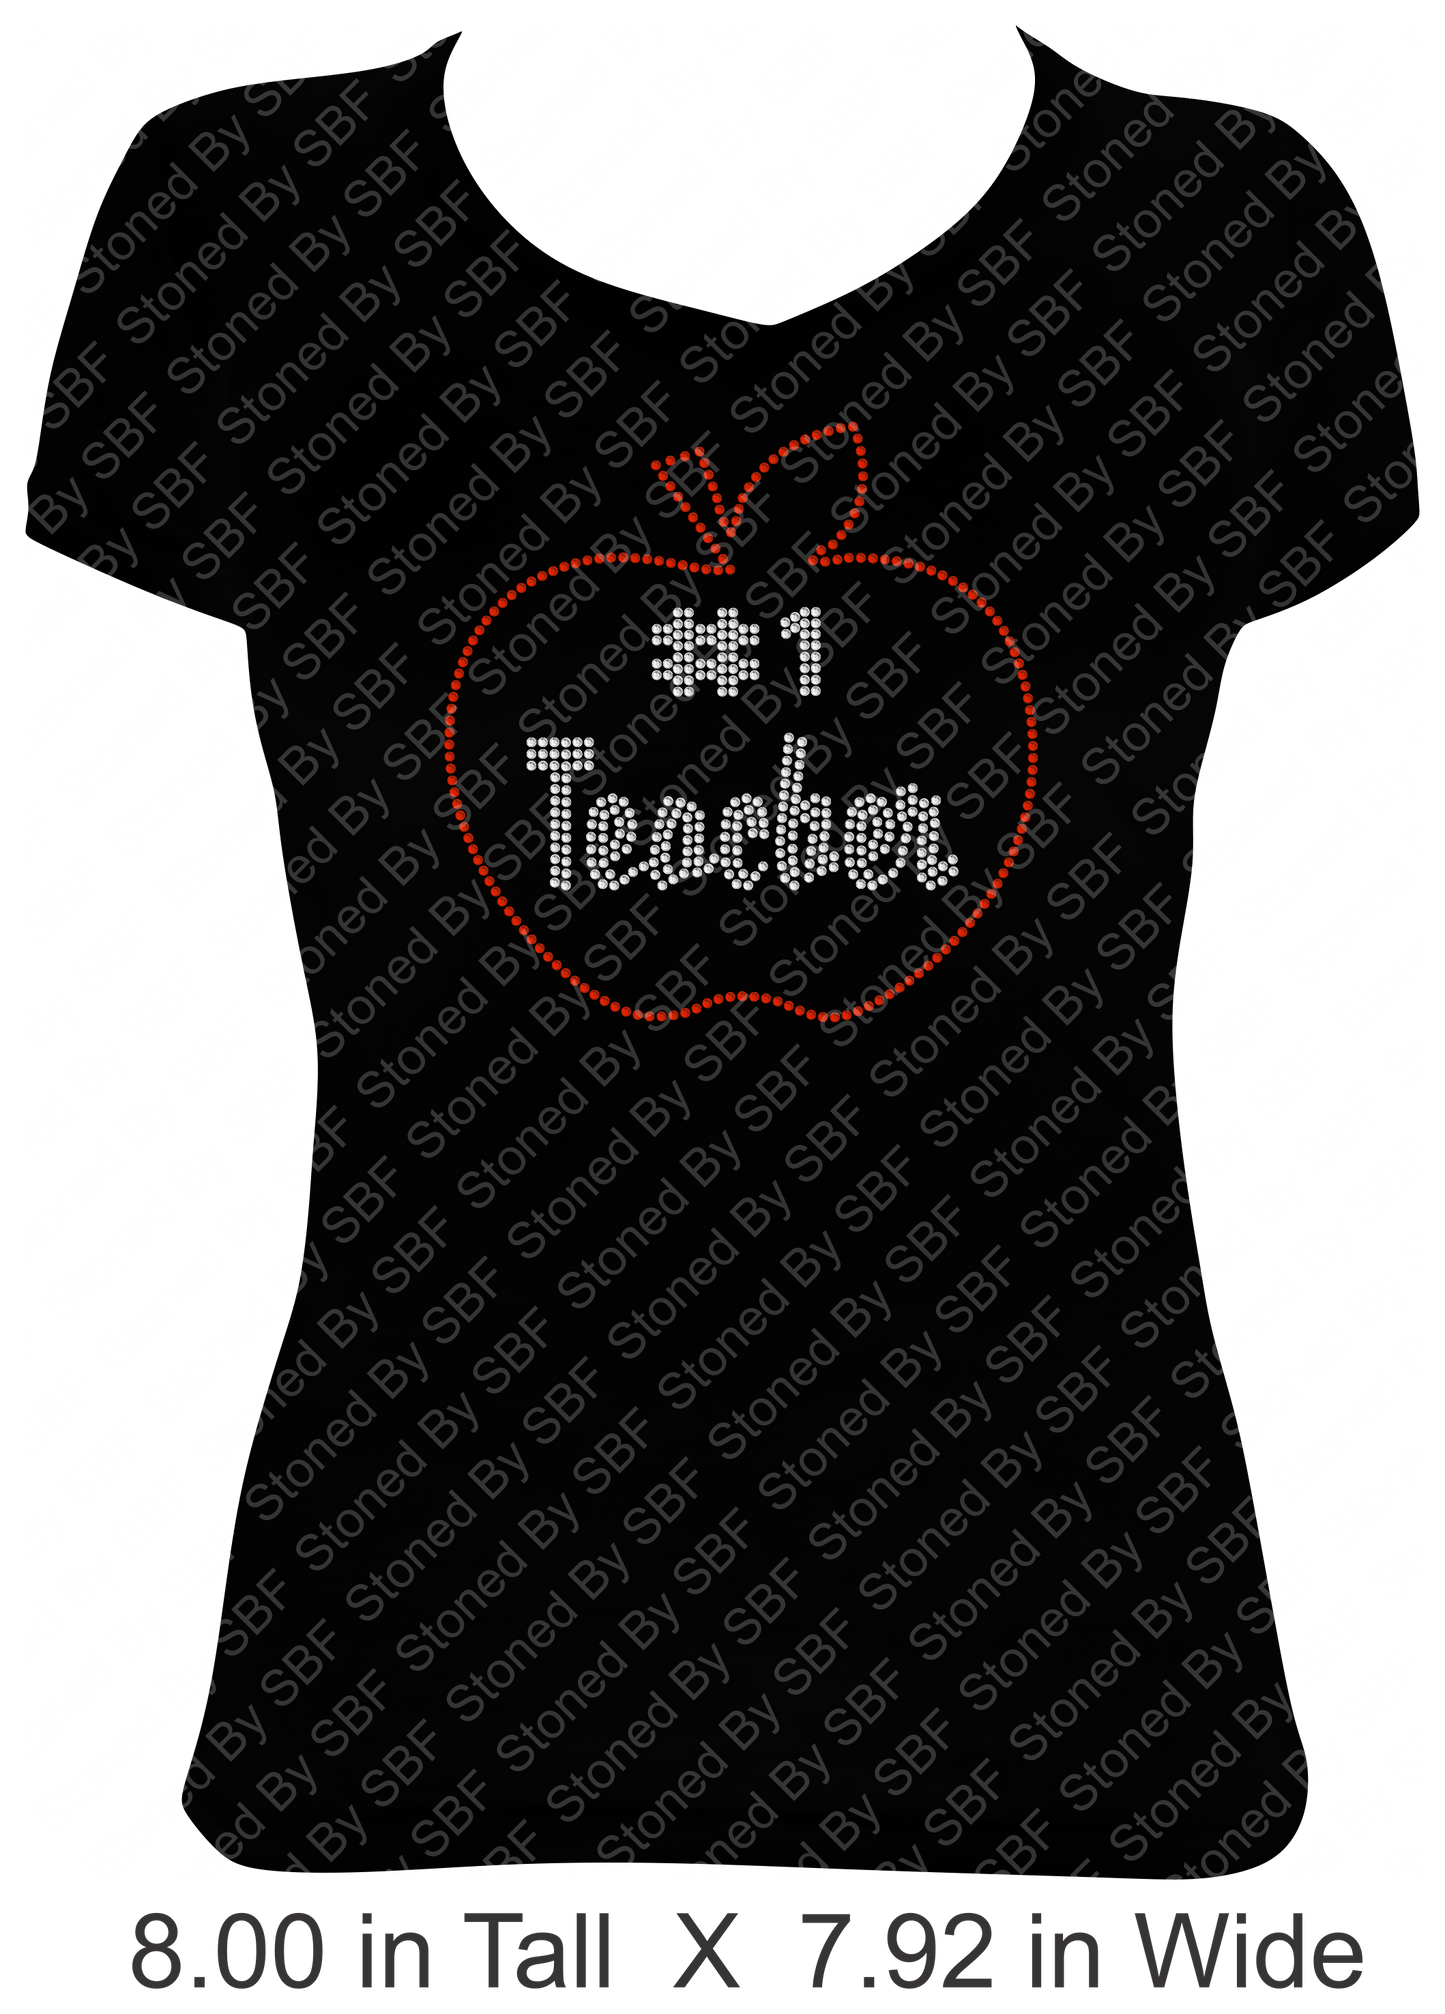 #1 Teacher